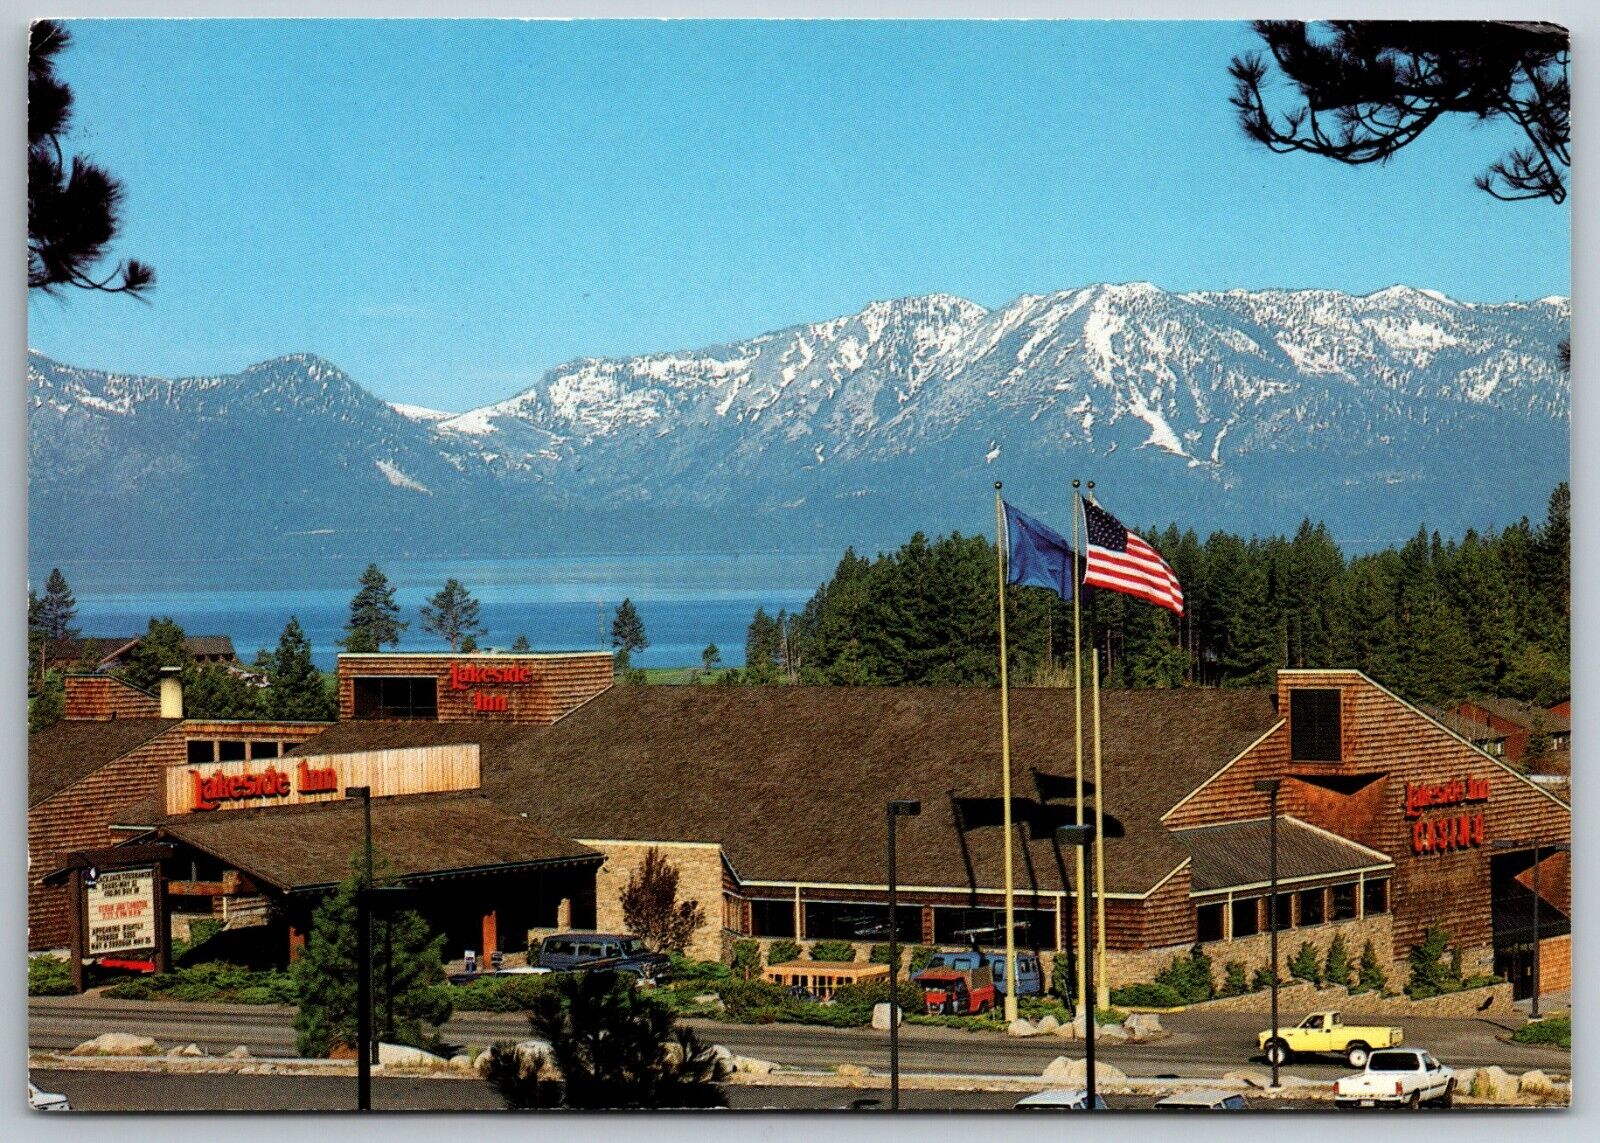 Lakeside Inn & Casino South Shore Lake Tahoe Nevada Stateline 1987 6x4 Postcard